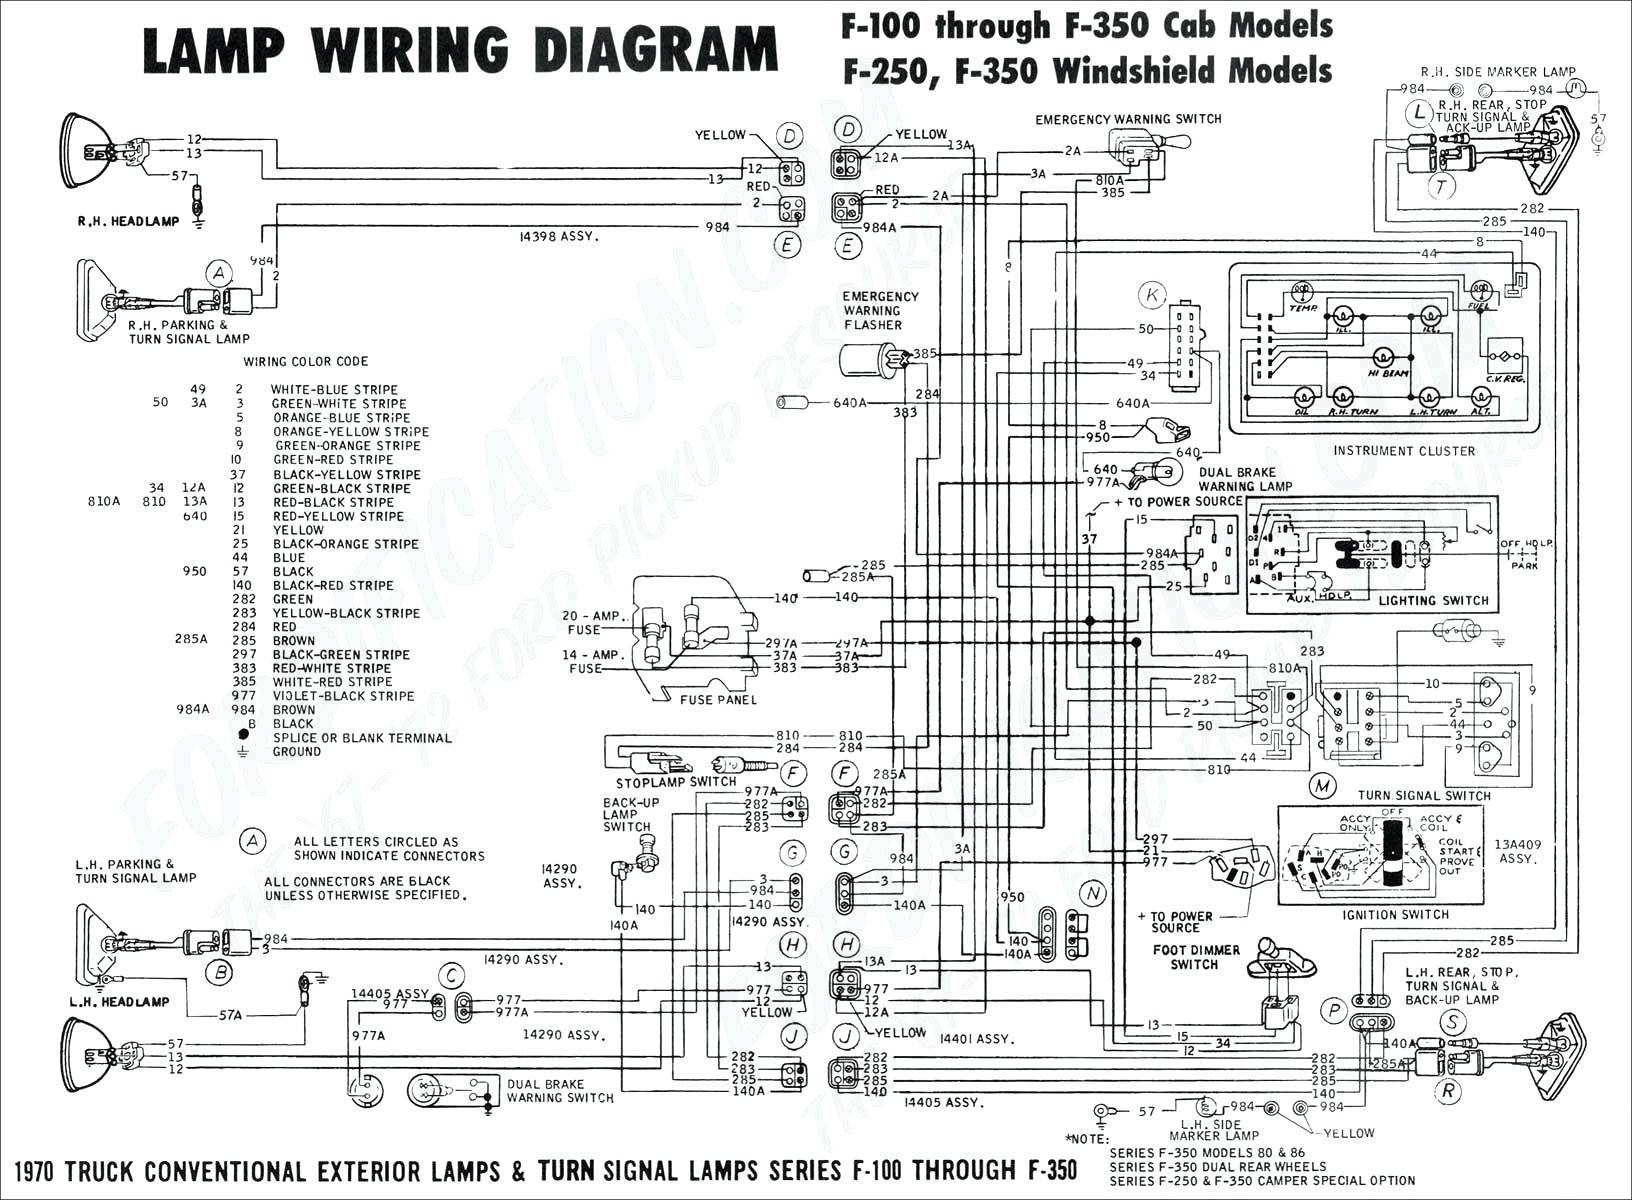 2003 Trailblazer Tail Light Circuit Diagram Awesome